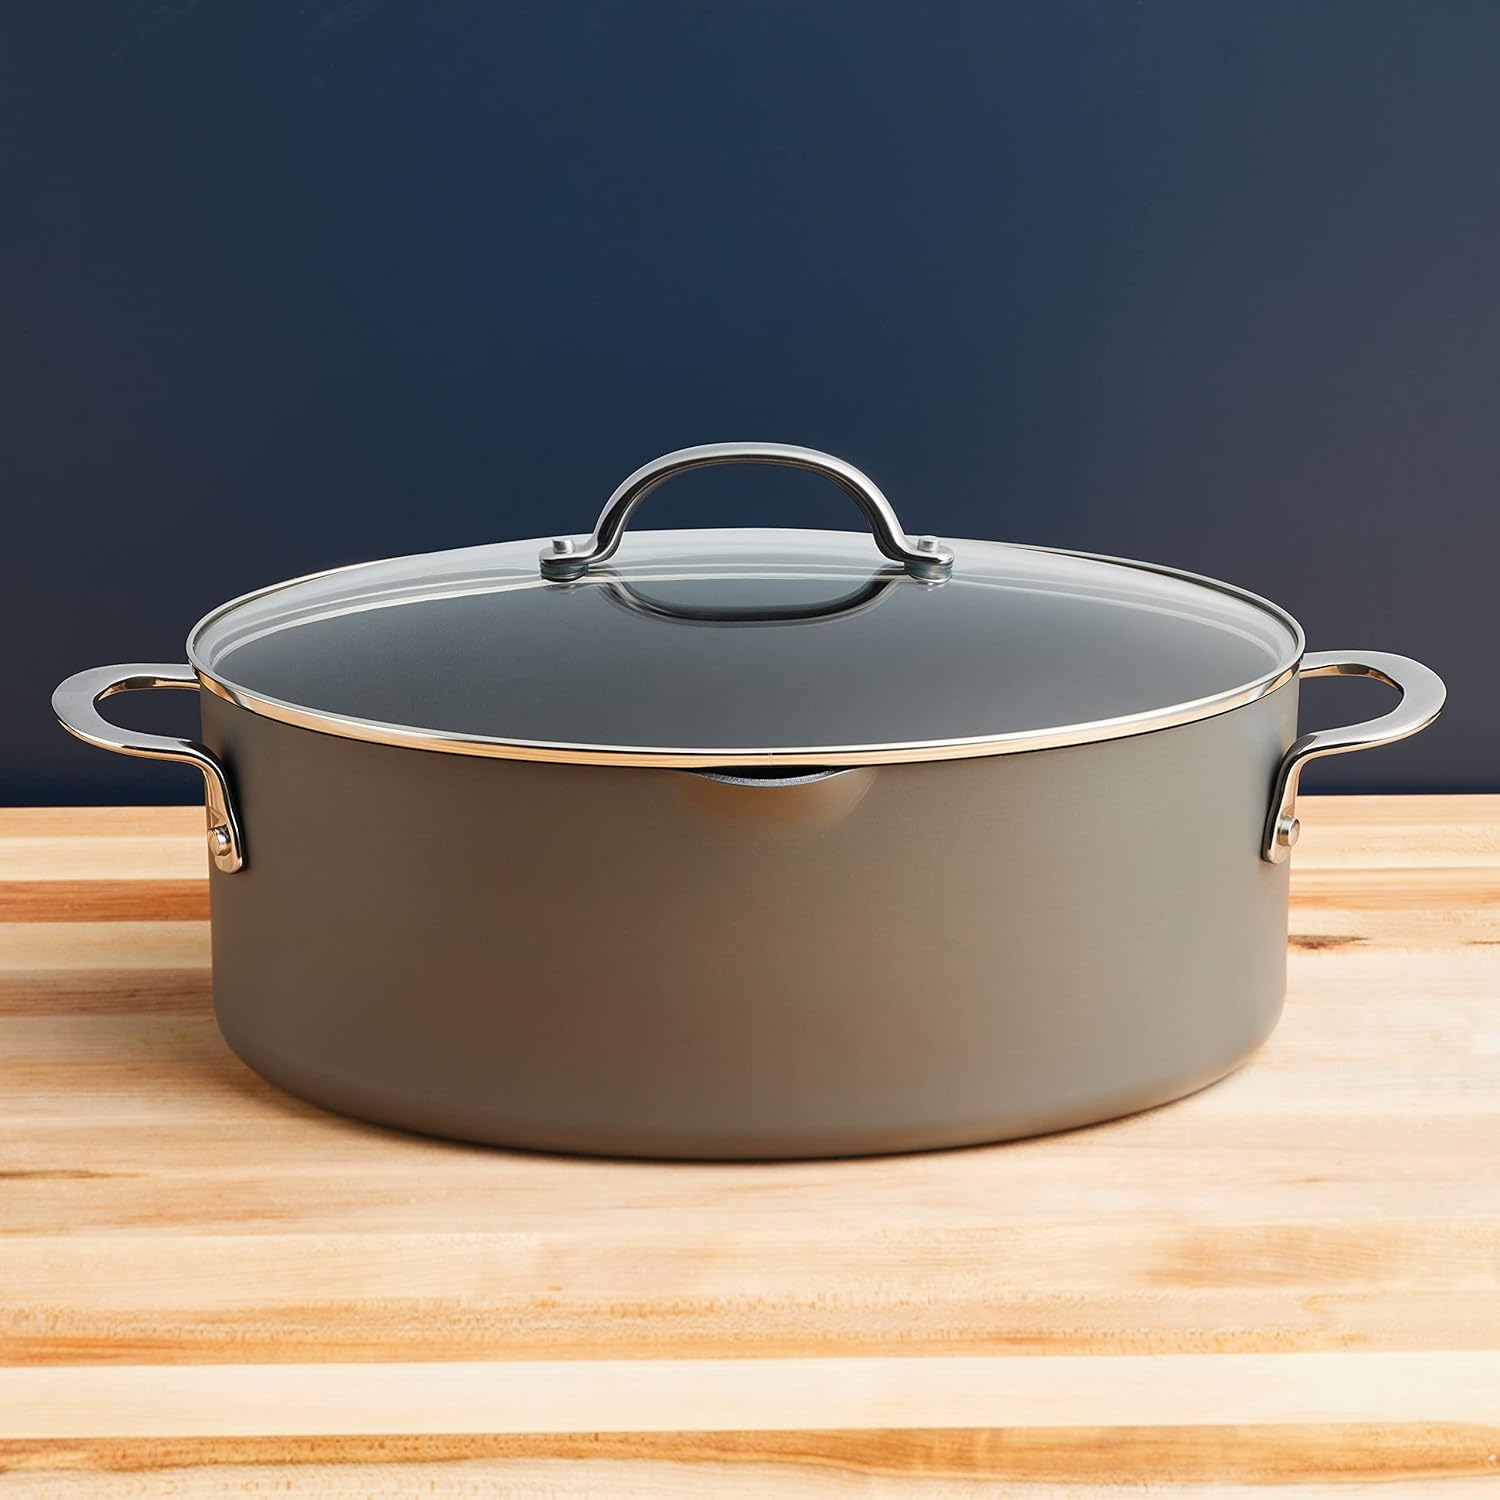 Rachael Ray 80090 Professional Hard Anodized Nonstick Cookware Oval Pasta Pot\/Braiser, 8 Quart - Gray